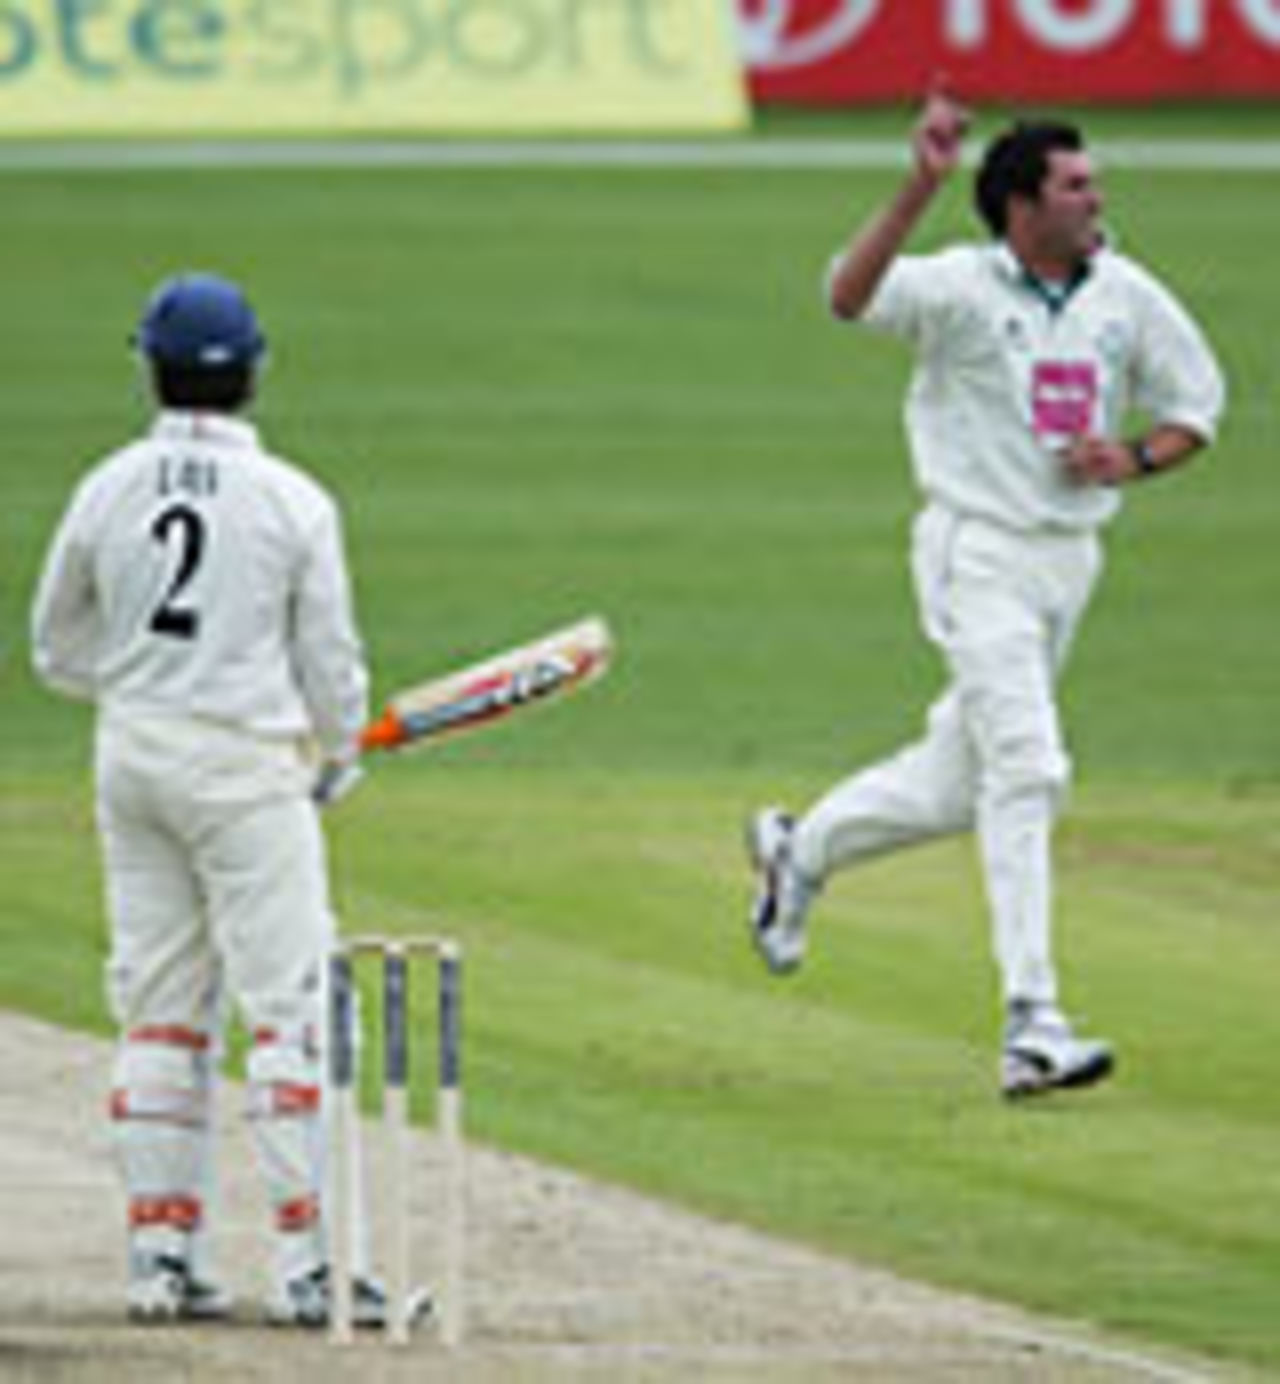 Matthew Mason celebrates the wicket of Stuart Law, Lancashire v Worcestershire, Old Trafford, May 12, 2004